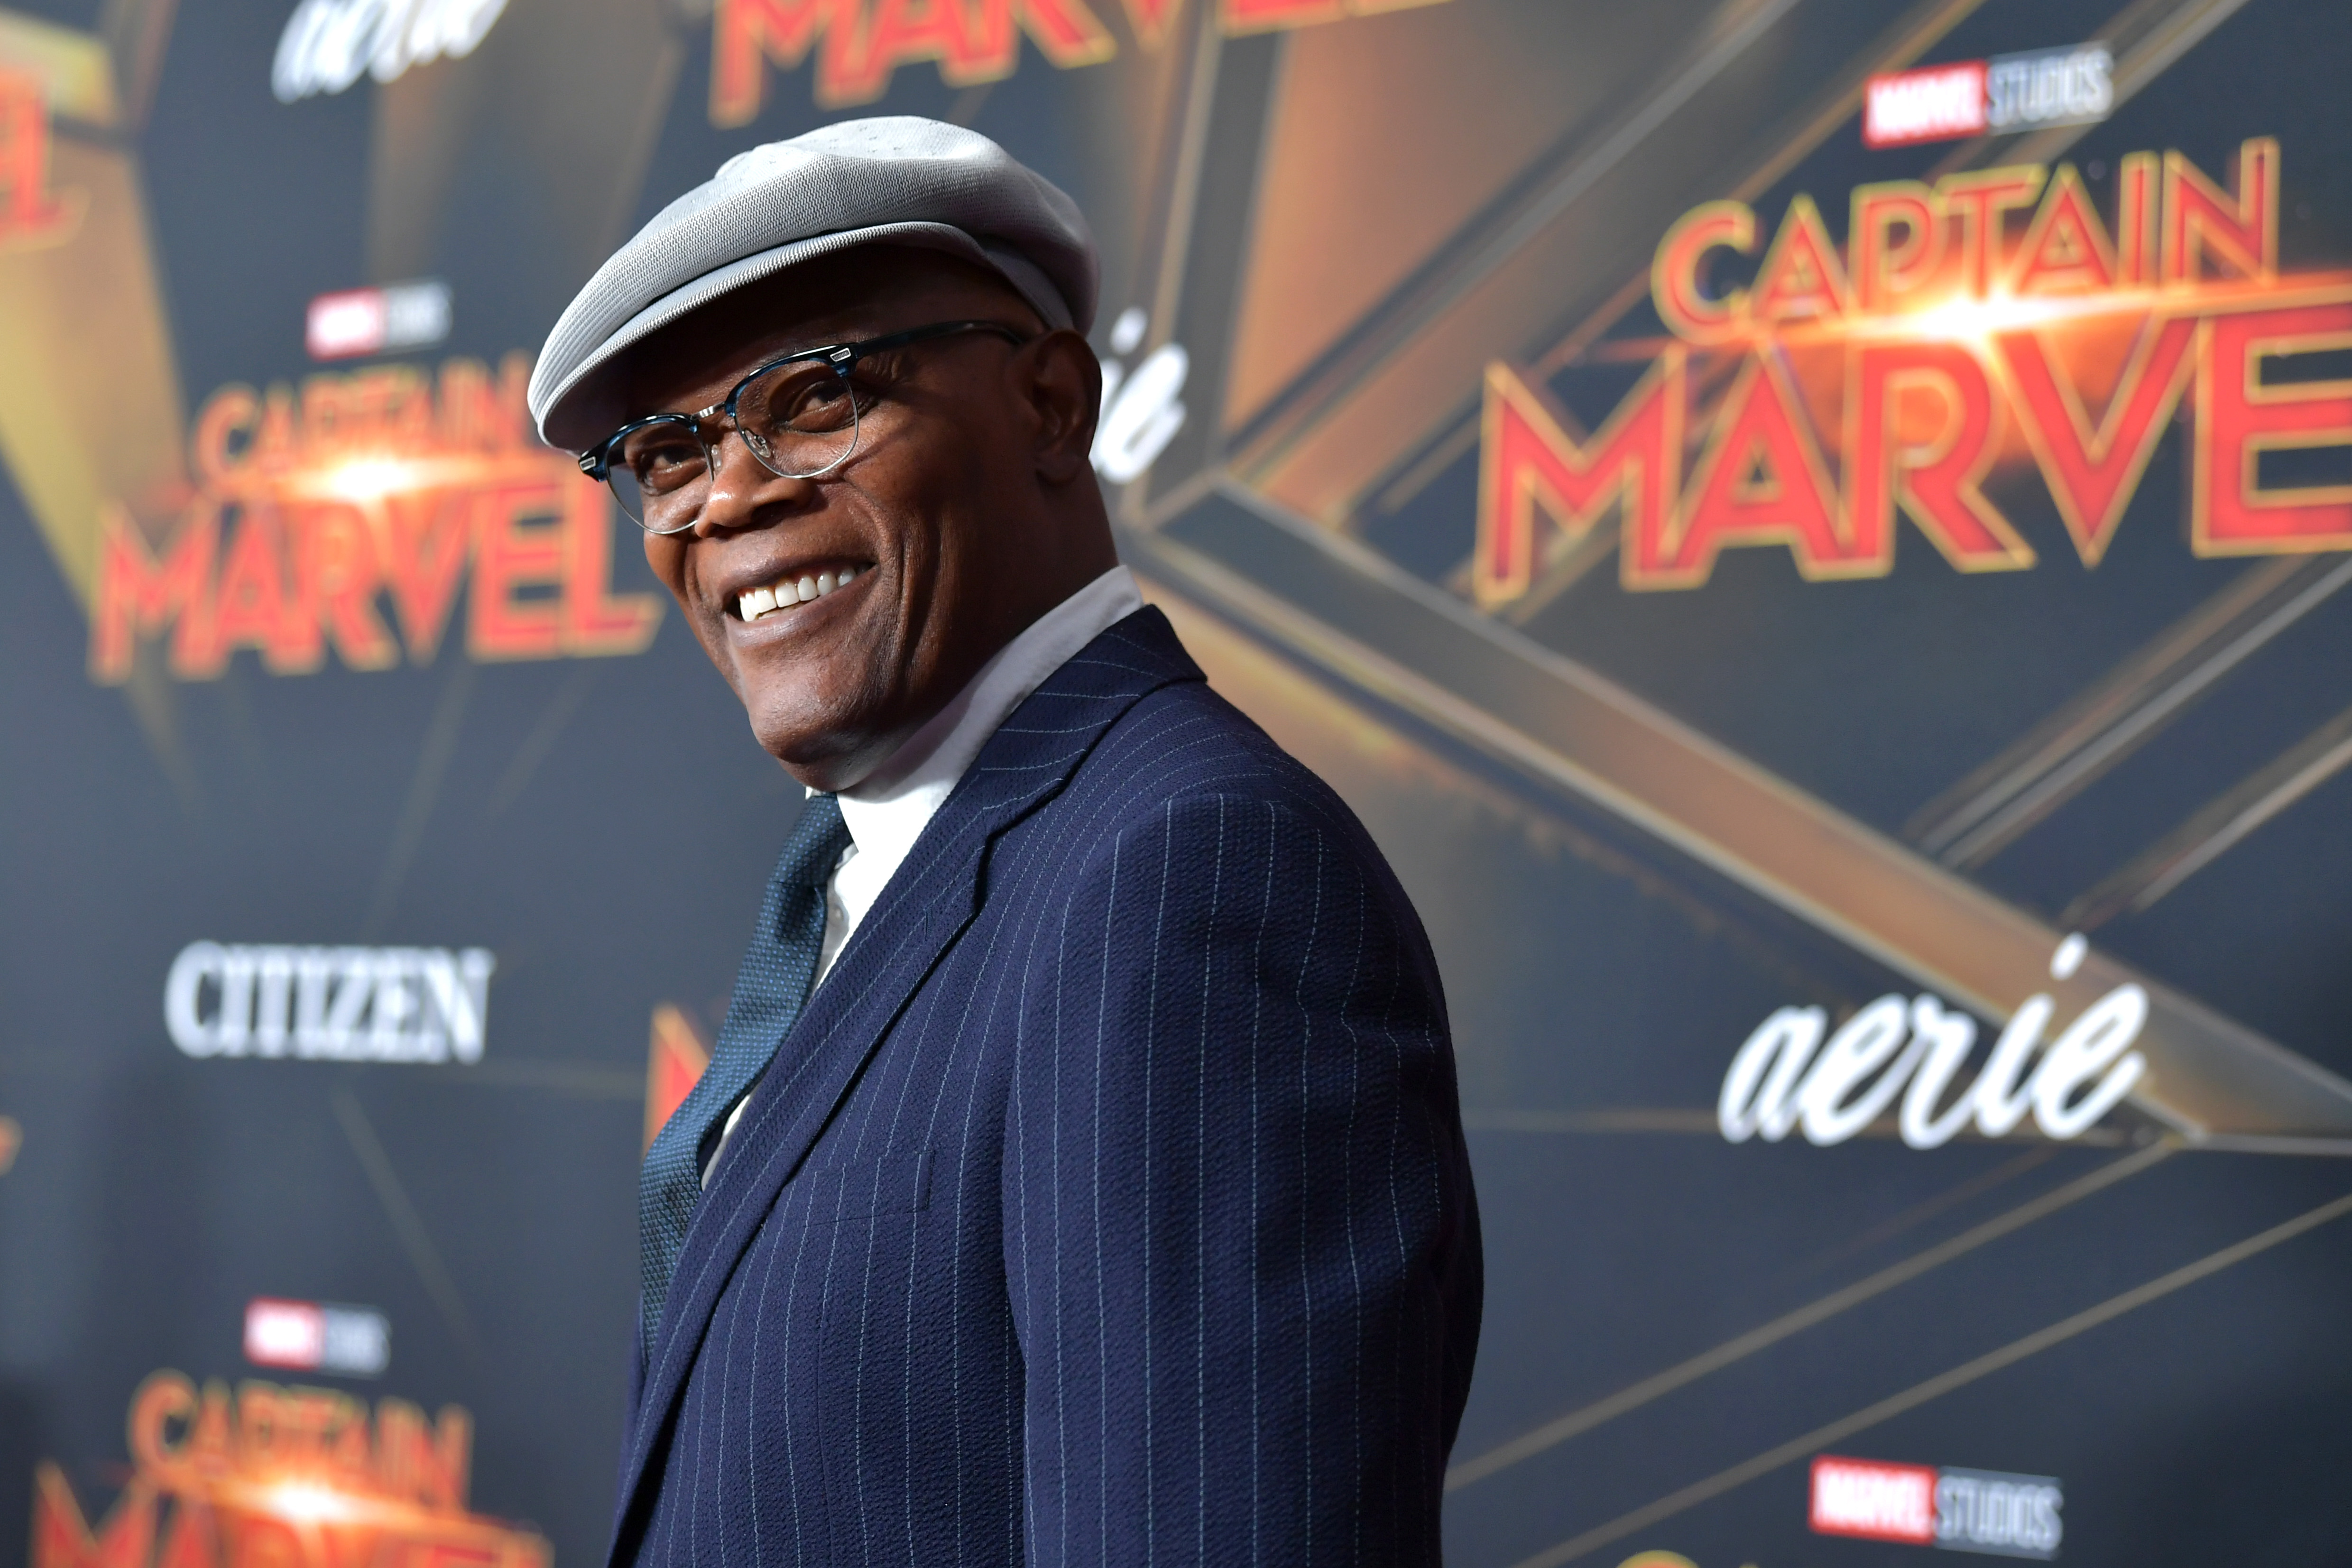 Samuel L. Jackson attends the premiere of Marvel's Captain Marvel movie